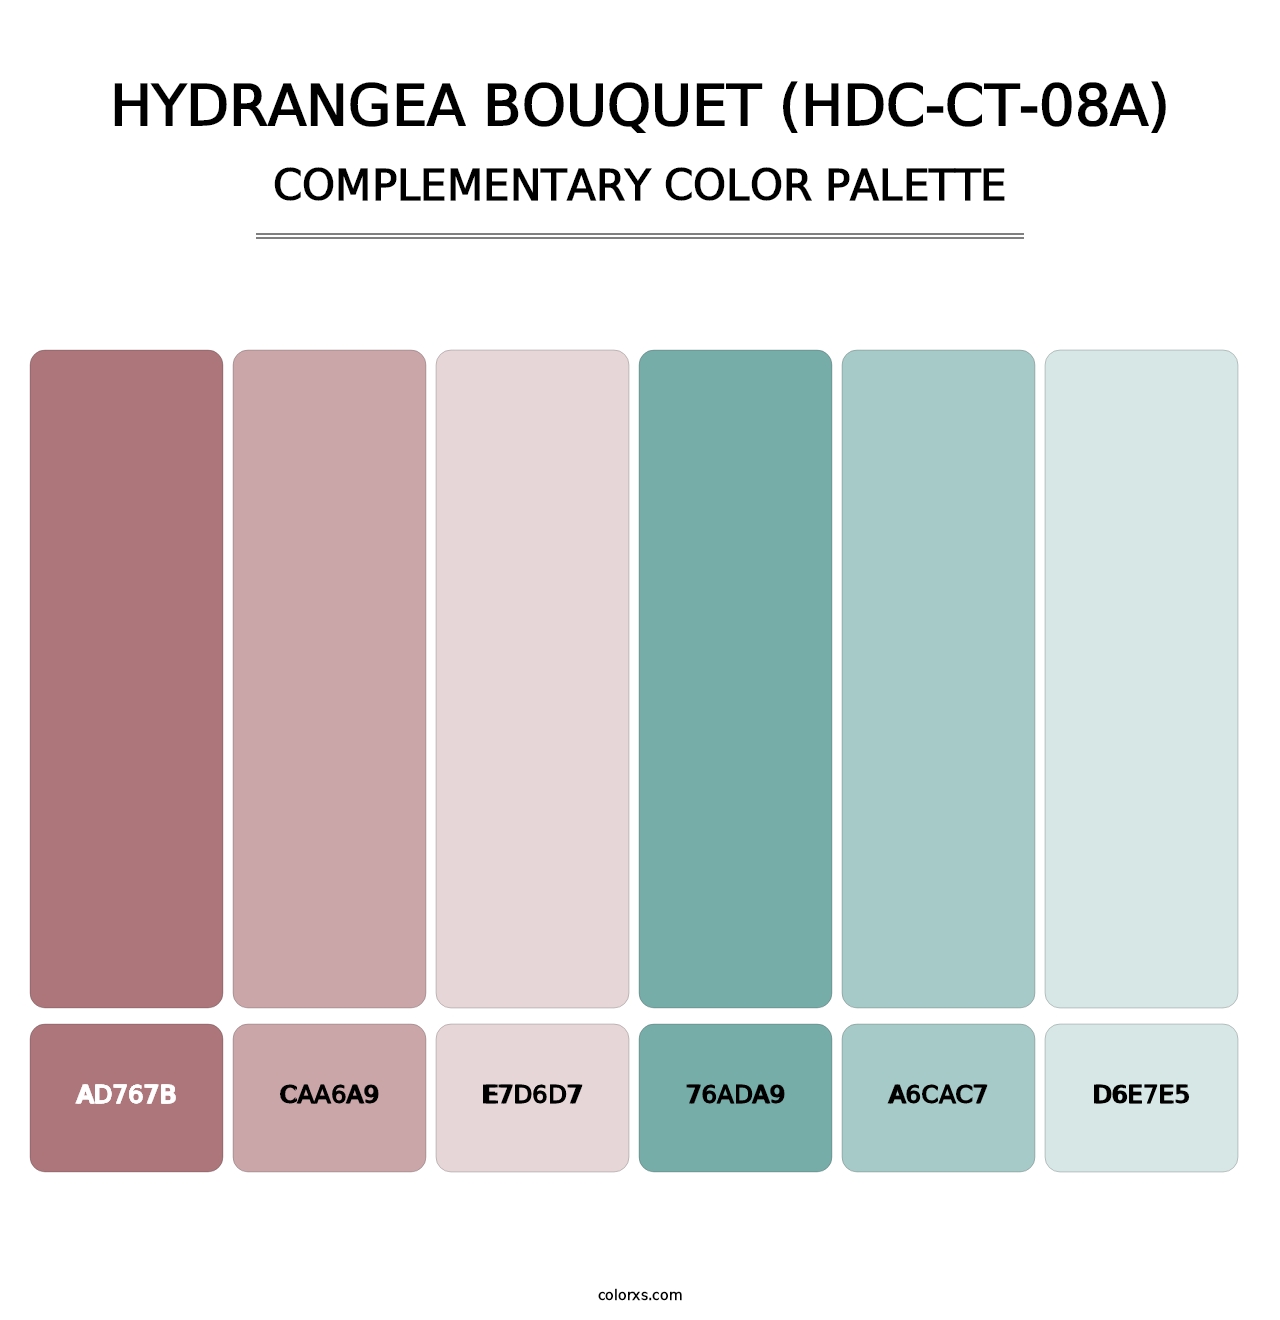 Hydrangea Bouquet (HDC-CT-08A) - Complementary Color Palette